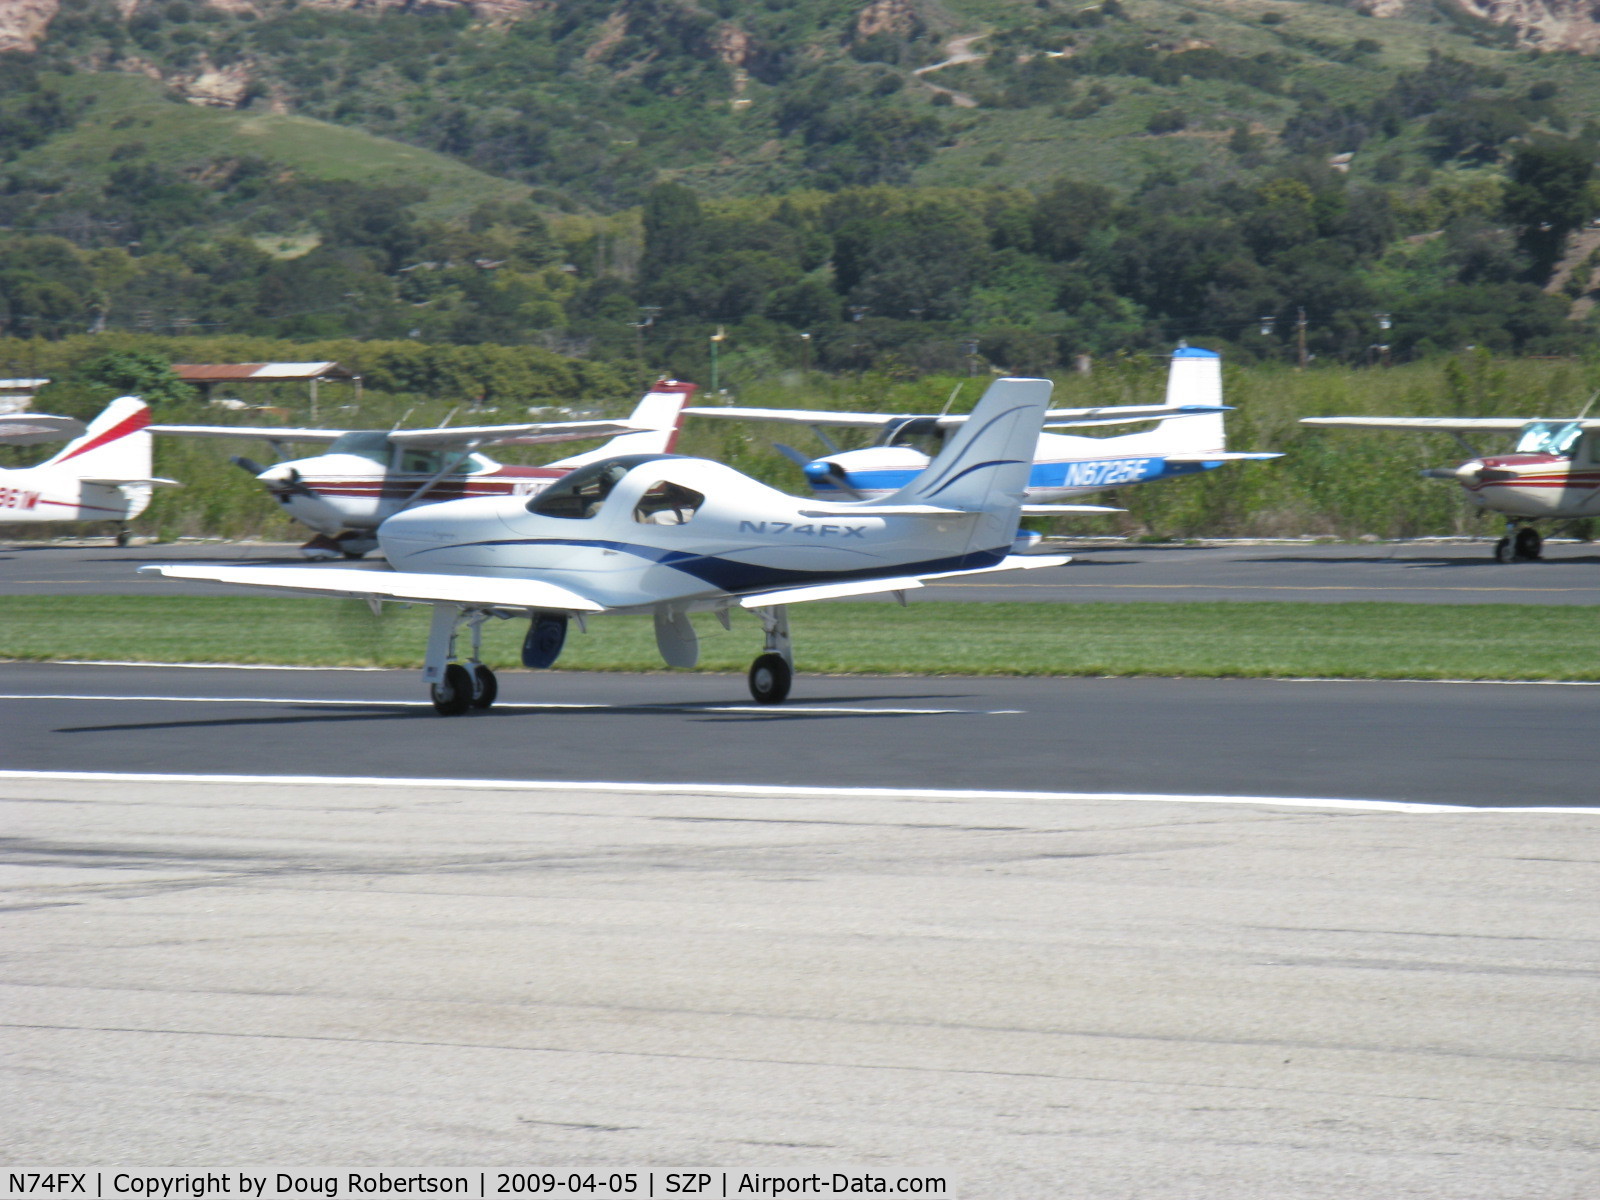 N74FX, 2007 Lancair Legacy C/N L2K-283, 2007 Larson LANCAIR LEGACY, Continental IO-550 300 Hp speedster, takeoff roll Rwy 04